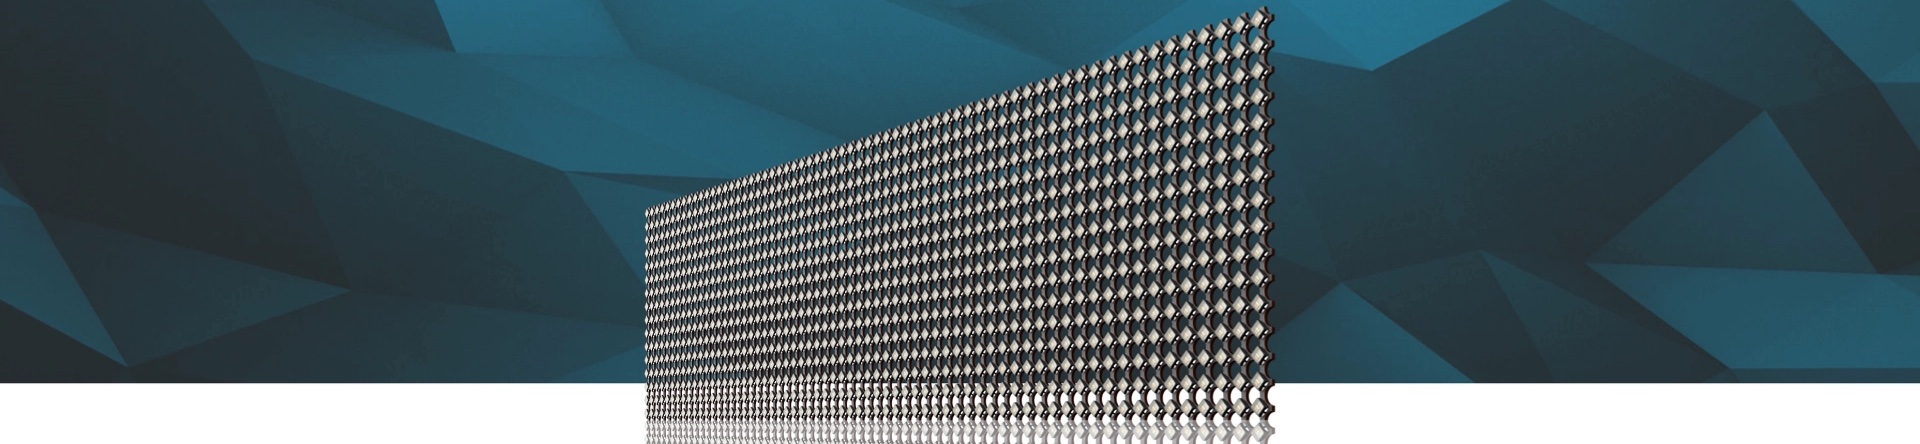 Banner de pantalla LED inmersivo transparente